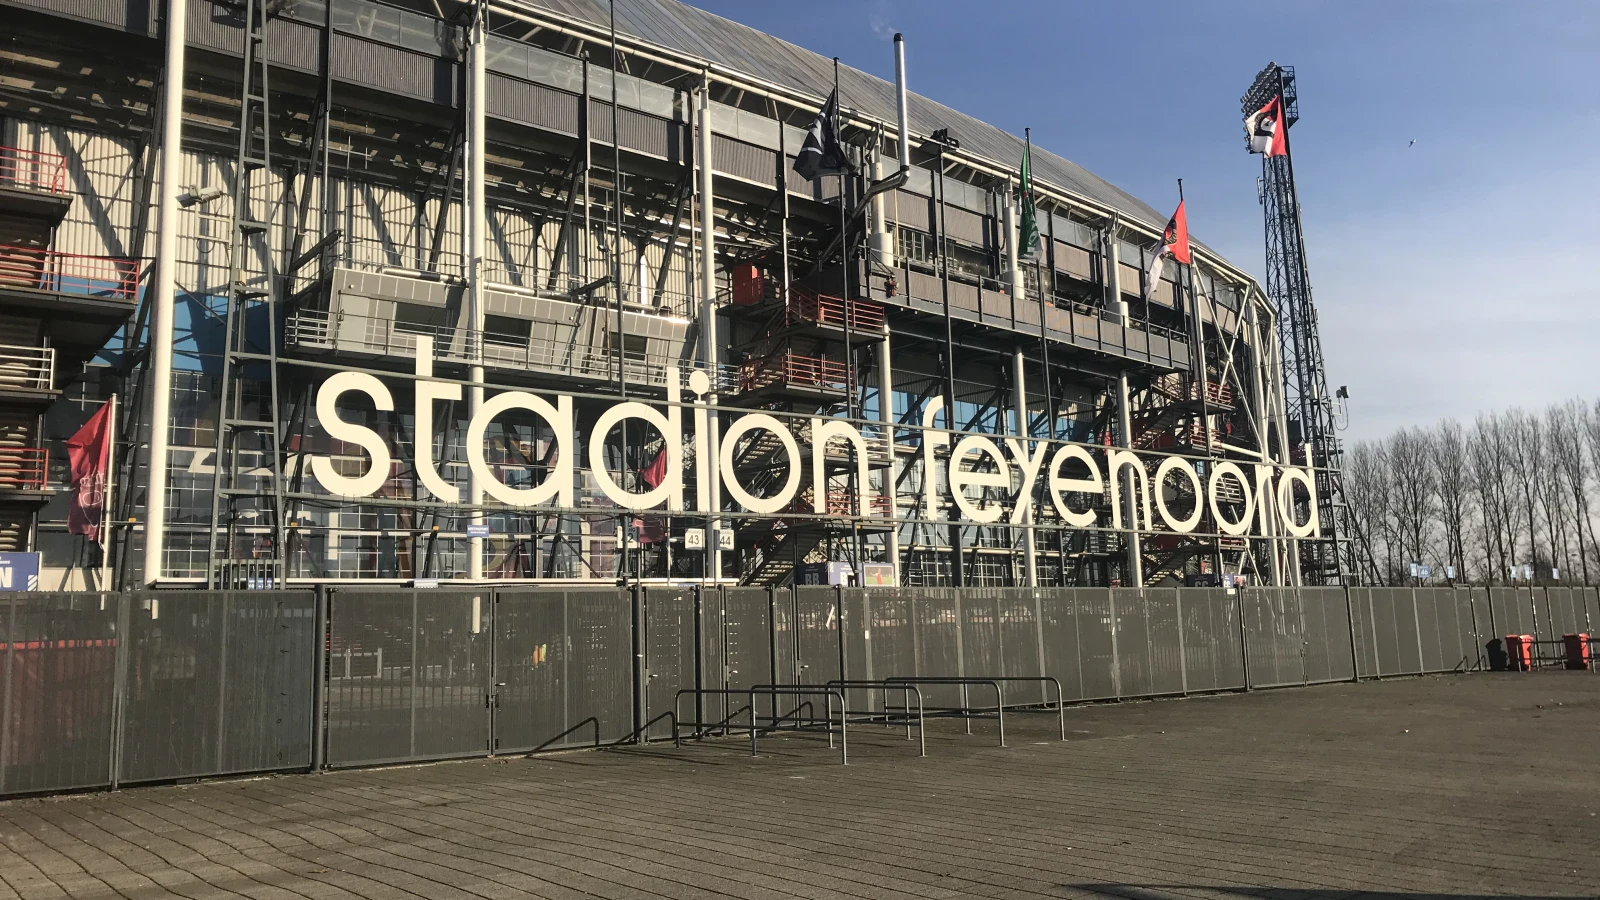 Samenwerking vastgelegd tussen Feyenoord en Rotterdamse onderwijsinstellingen